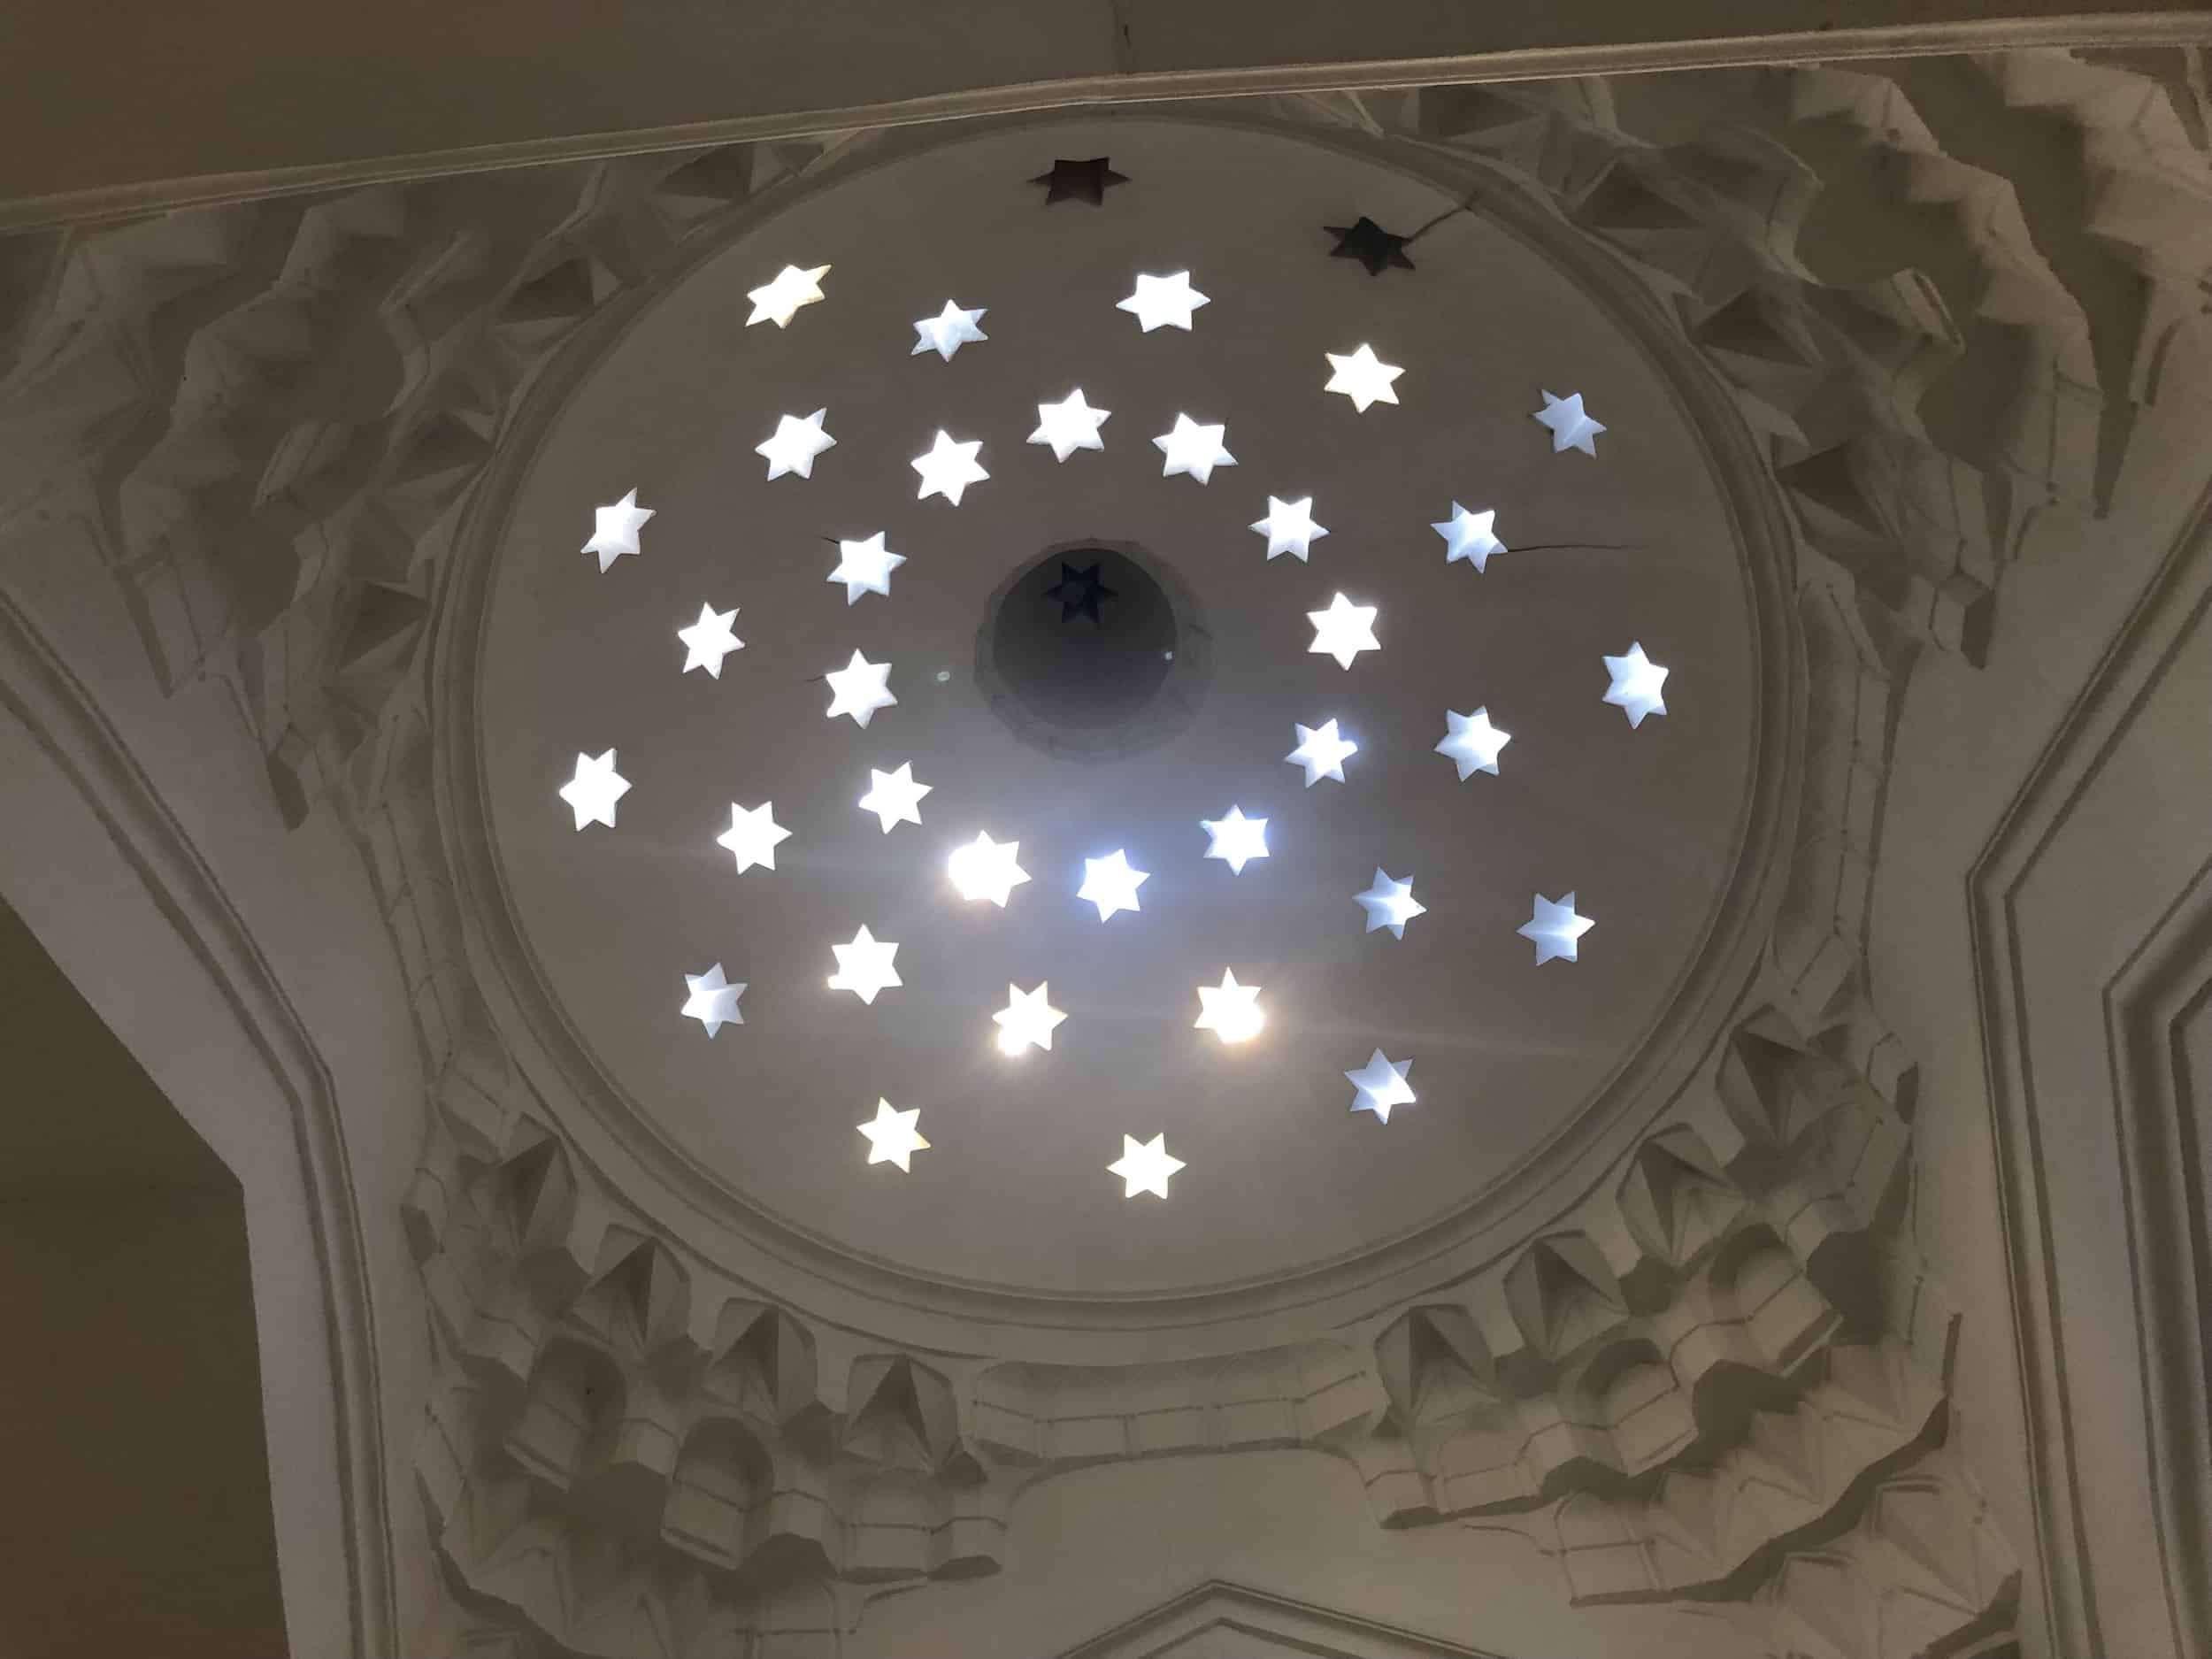 Dome in the women's warm room at the Bayezid II Hamam (Bayezid II Turkish Bath Cultural Museum) in Beyazıt, Istanbul, Turkey